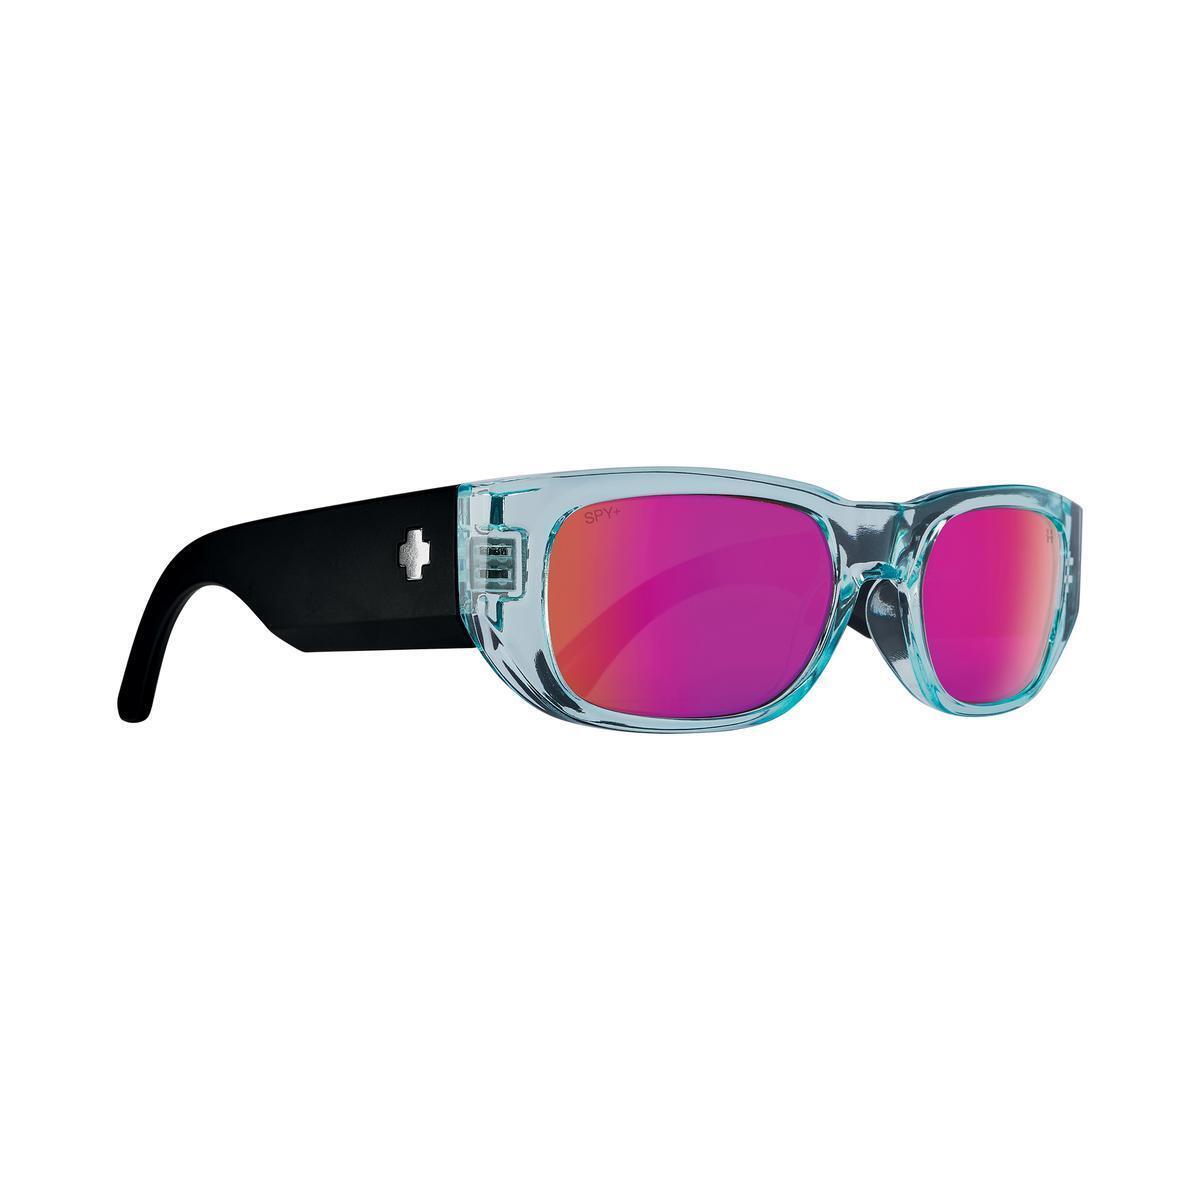 Spy Optic Genre Sunglasses Translucent Aqua Matte Black